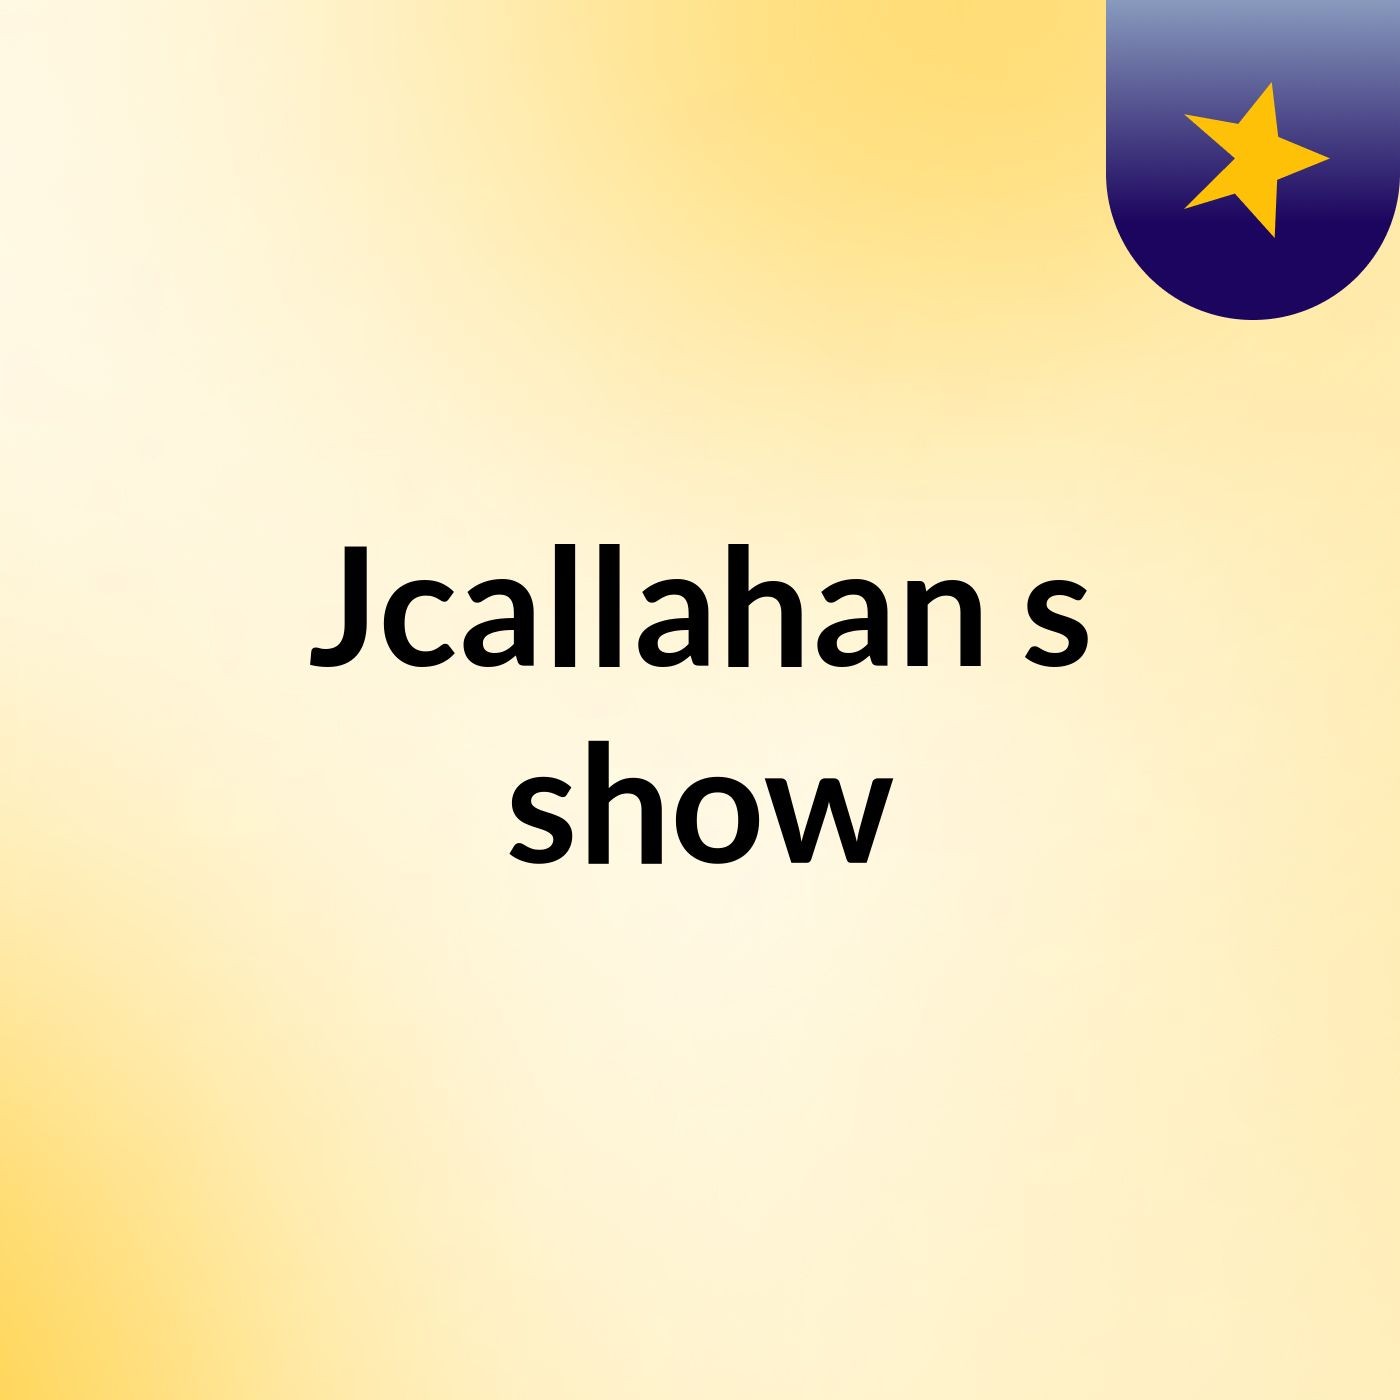 Jcallahan's show